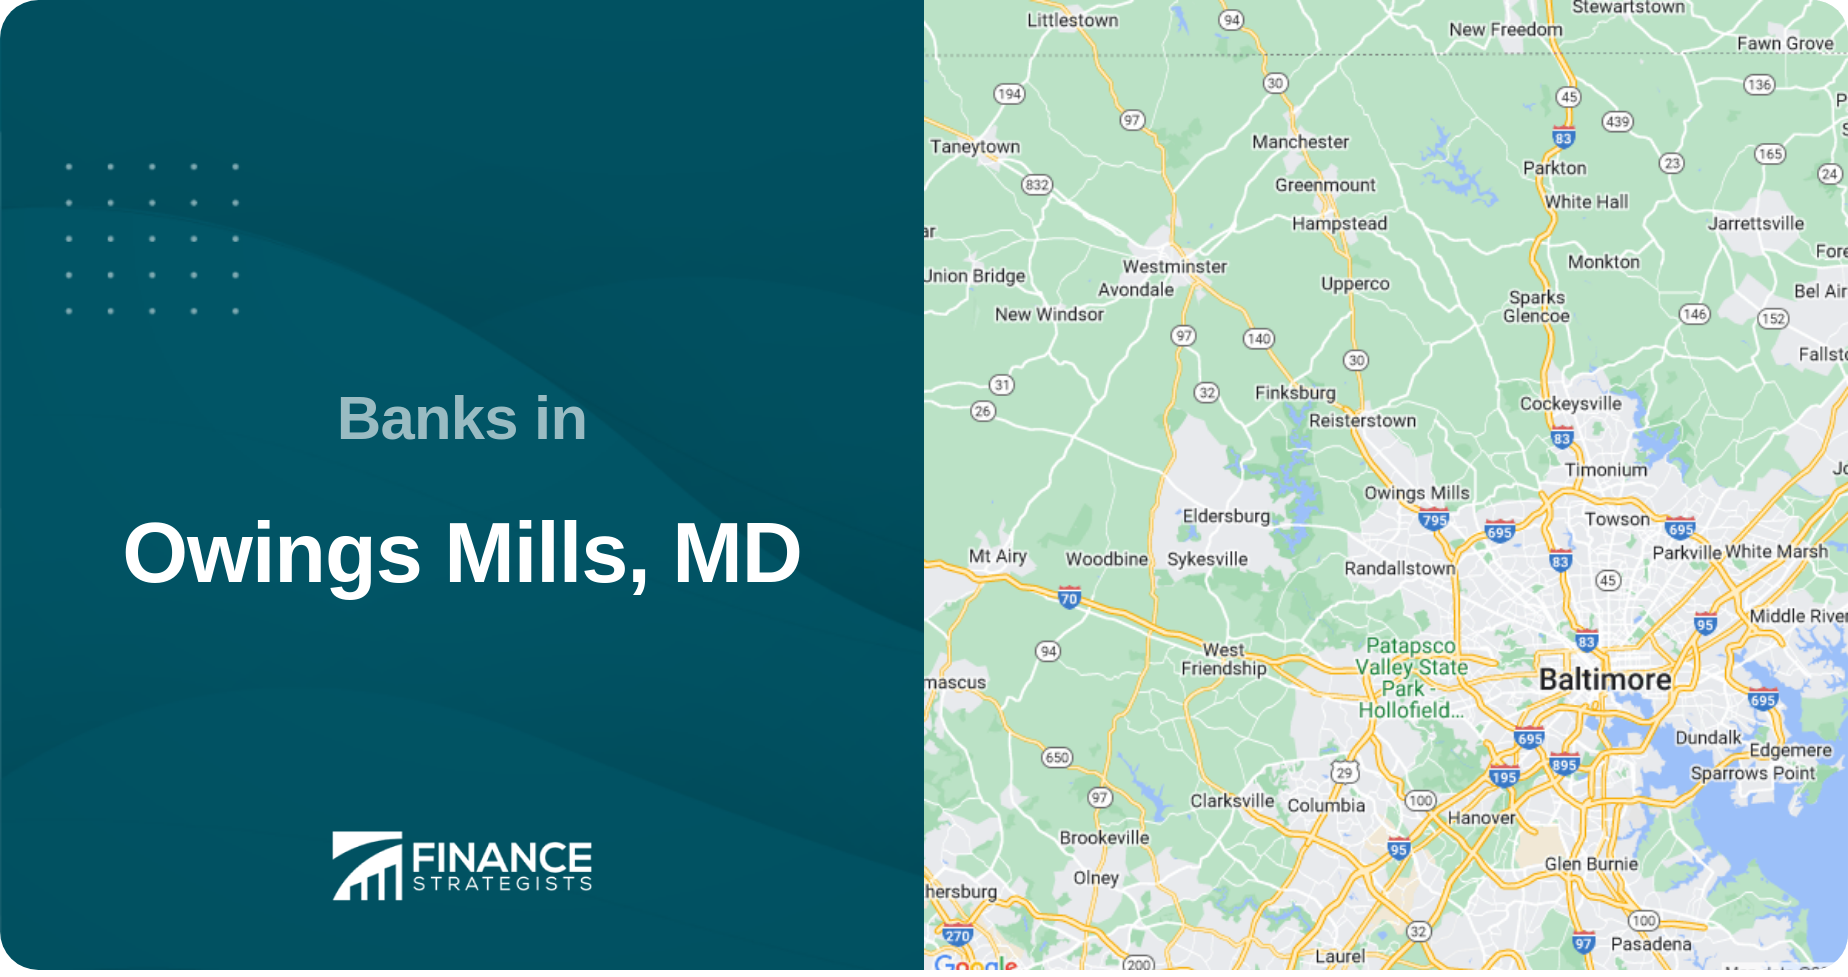 Banks in Owings Mills, MD